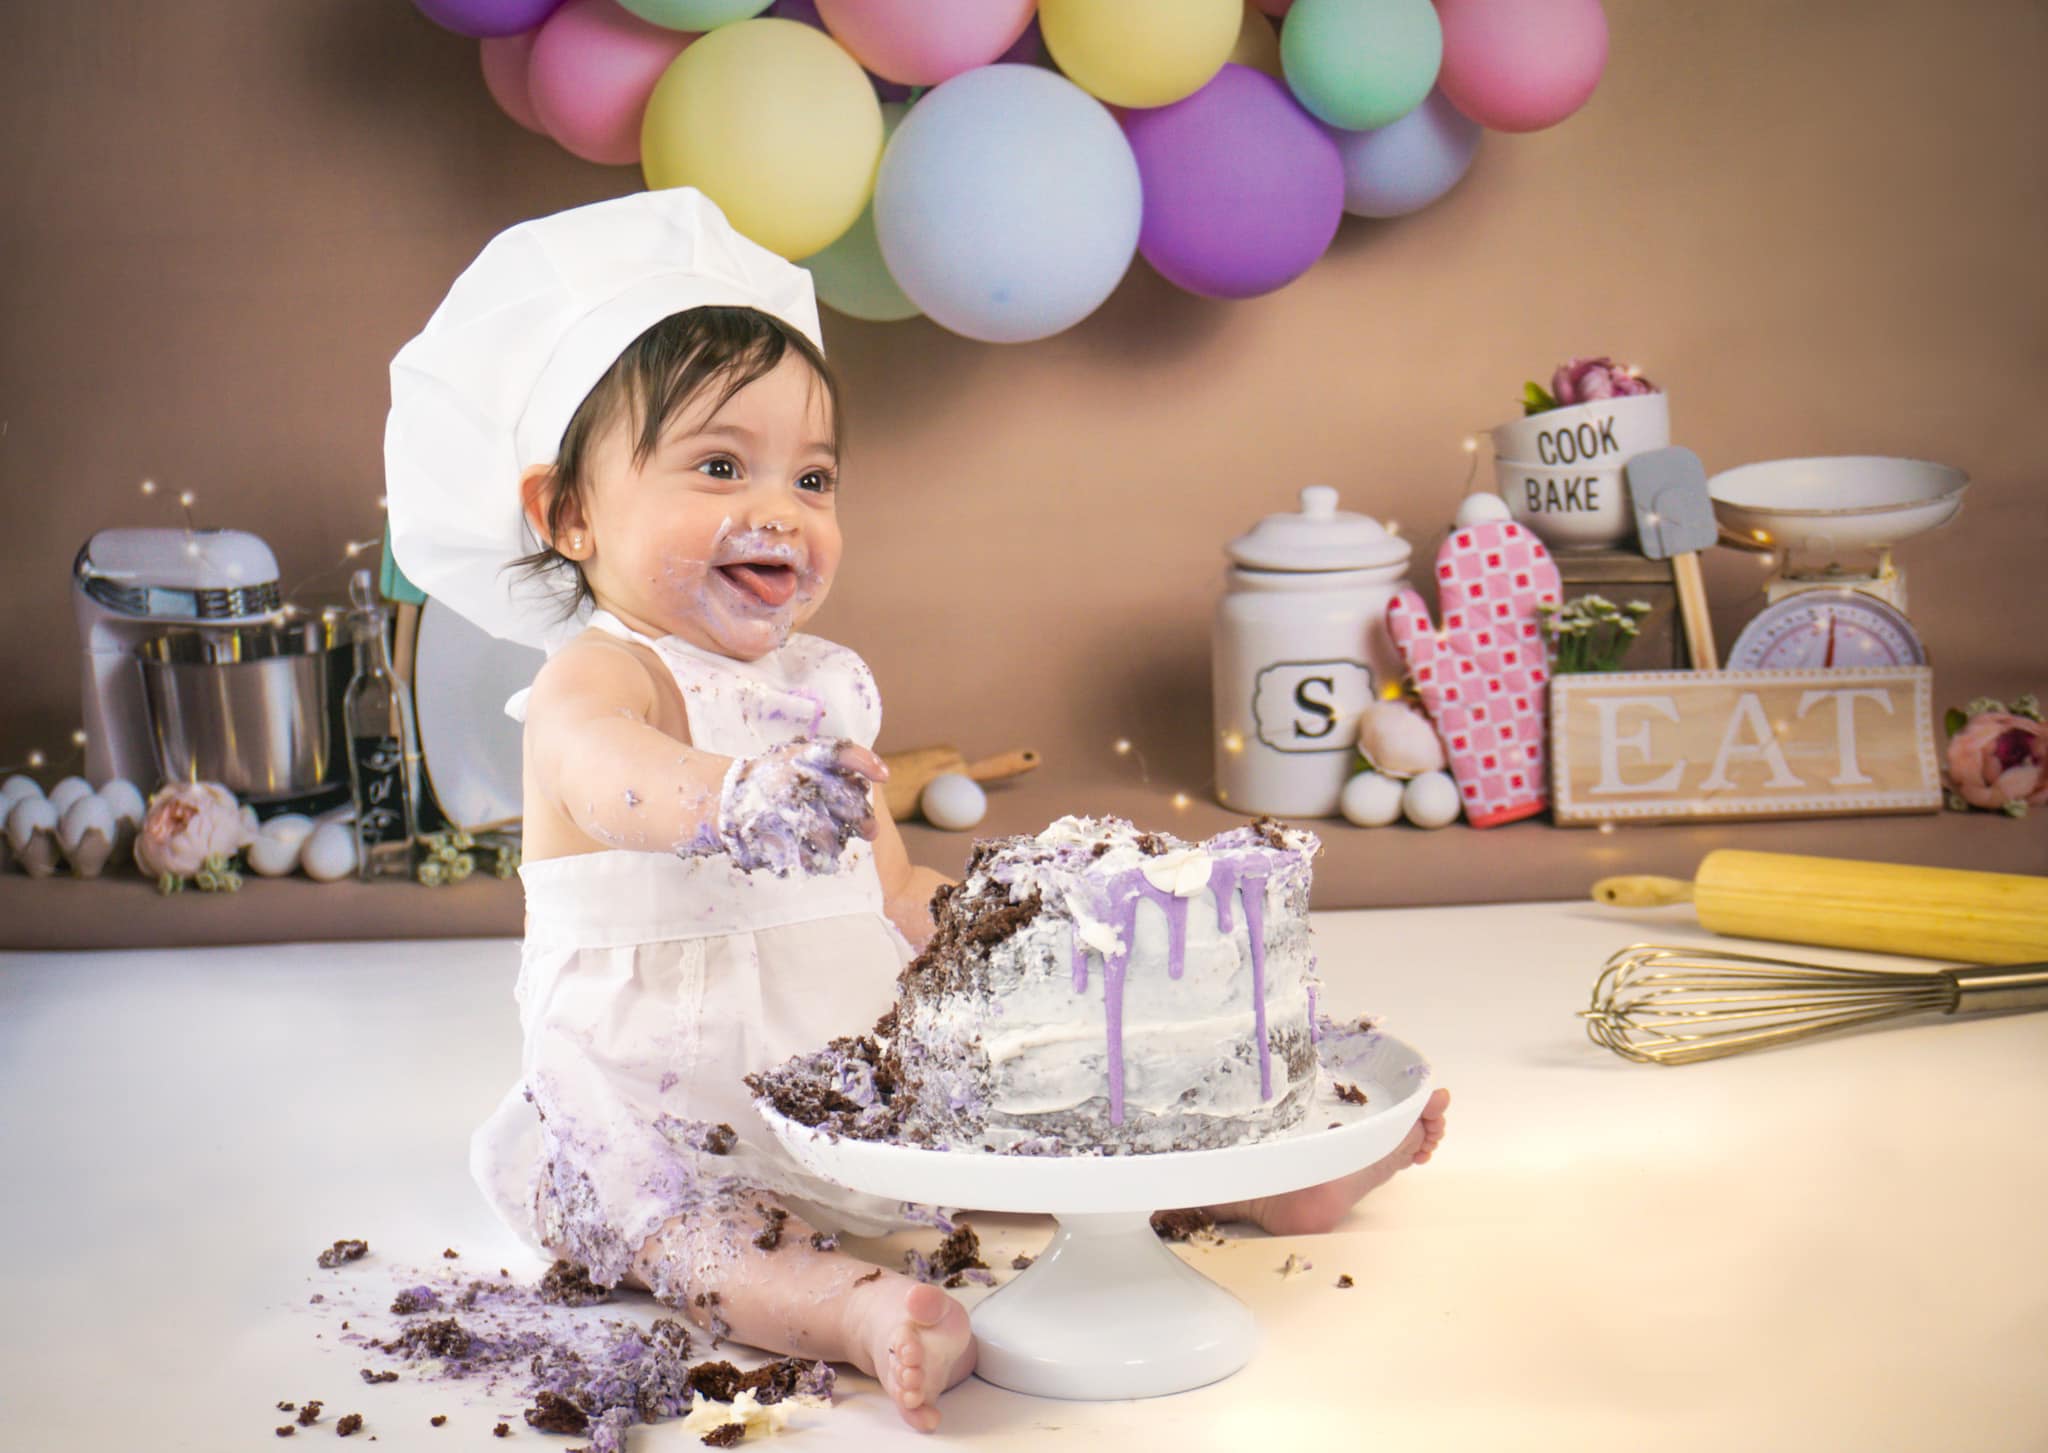 Kate Cake Smash Baker Children Backdrop Designed by Megan Leigh Photography